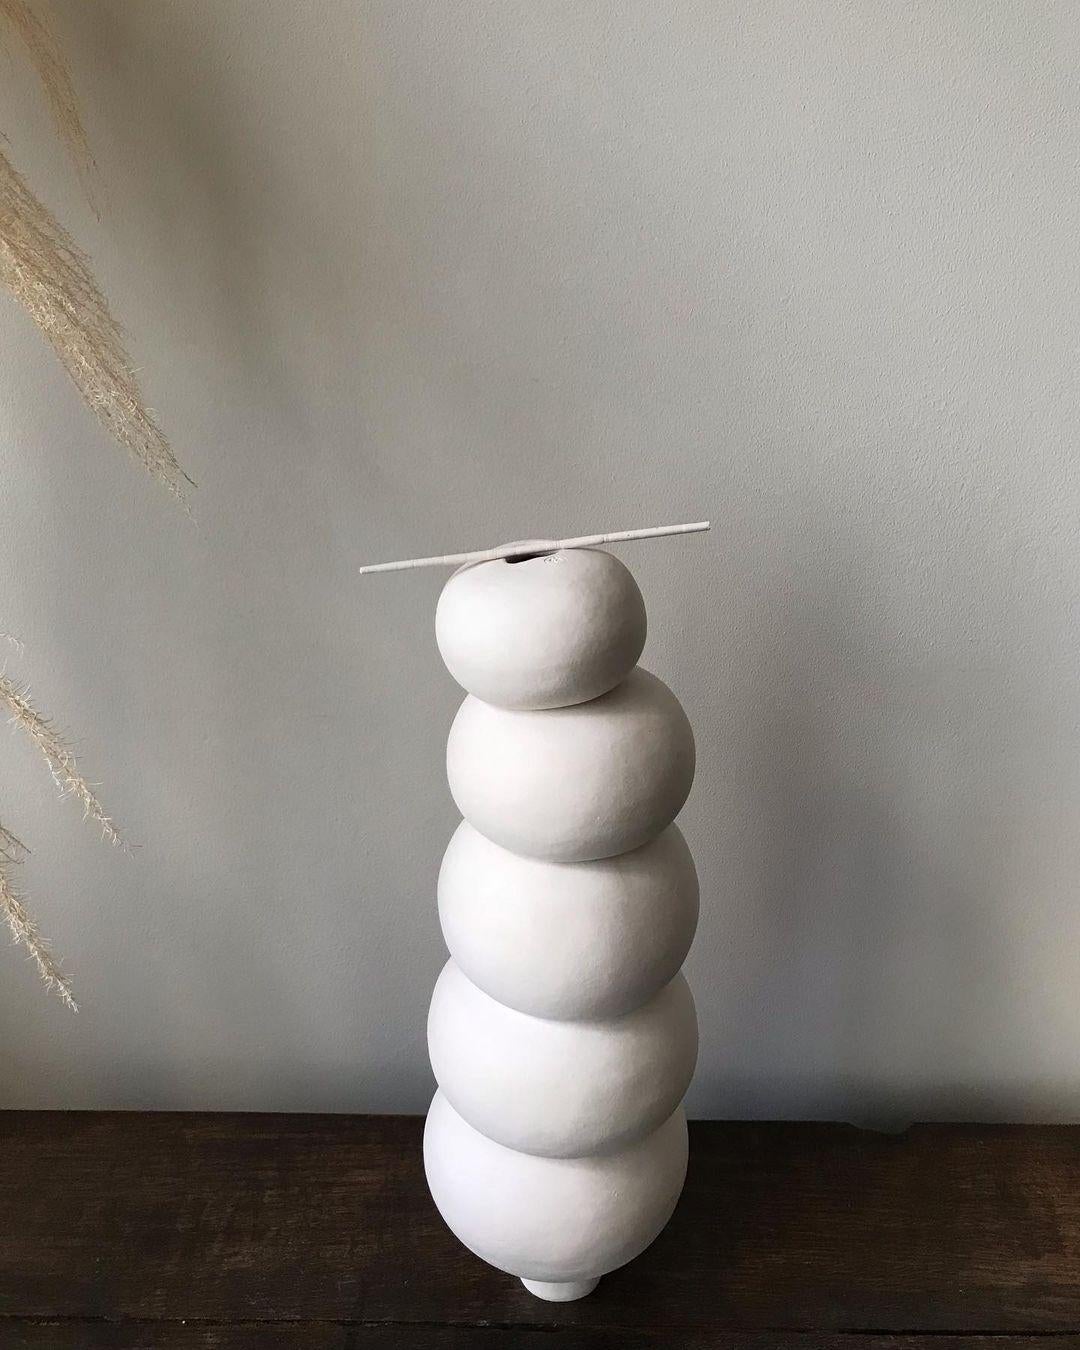 Dutch Modder Balancing Ceramic Sculpture by Françoise Jeffrey